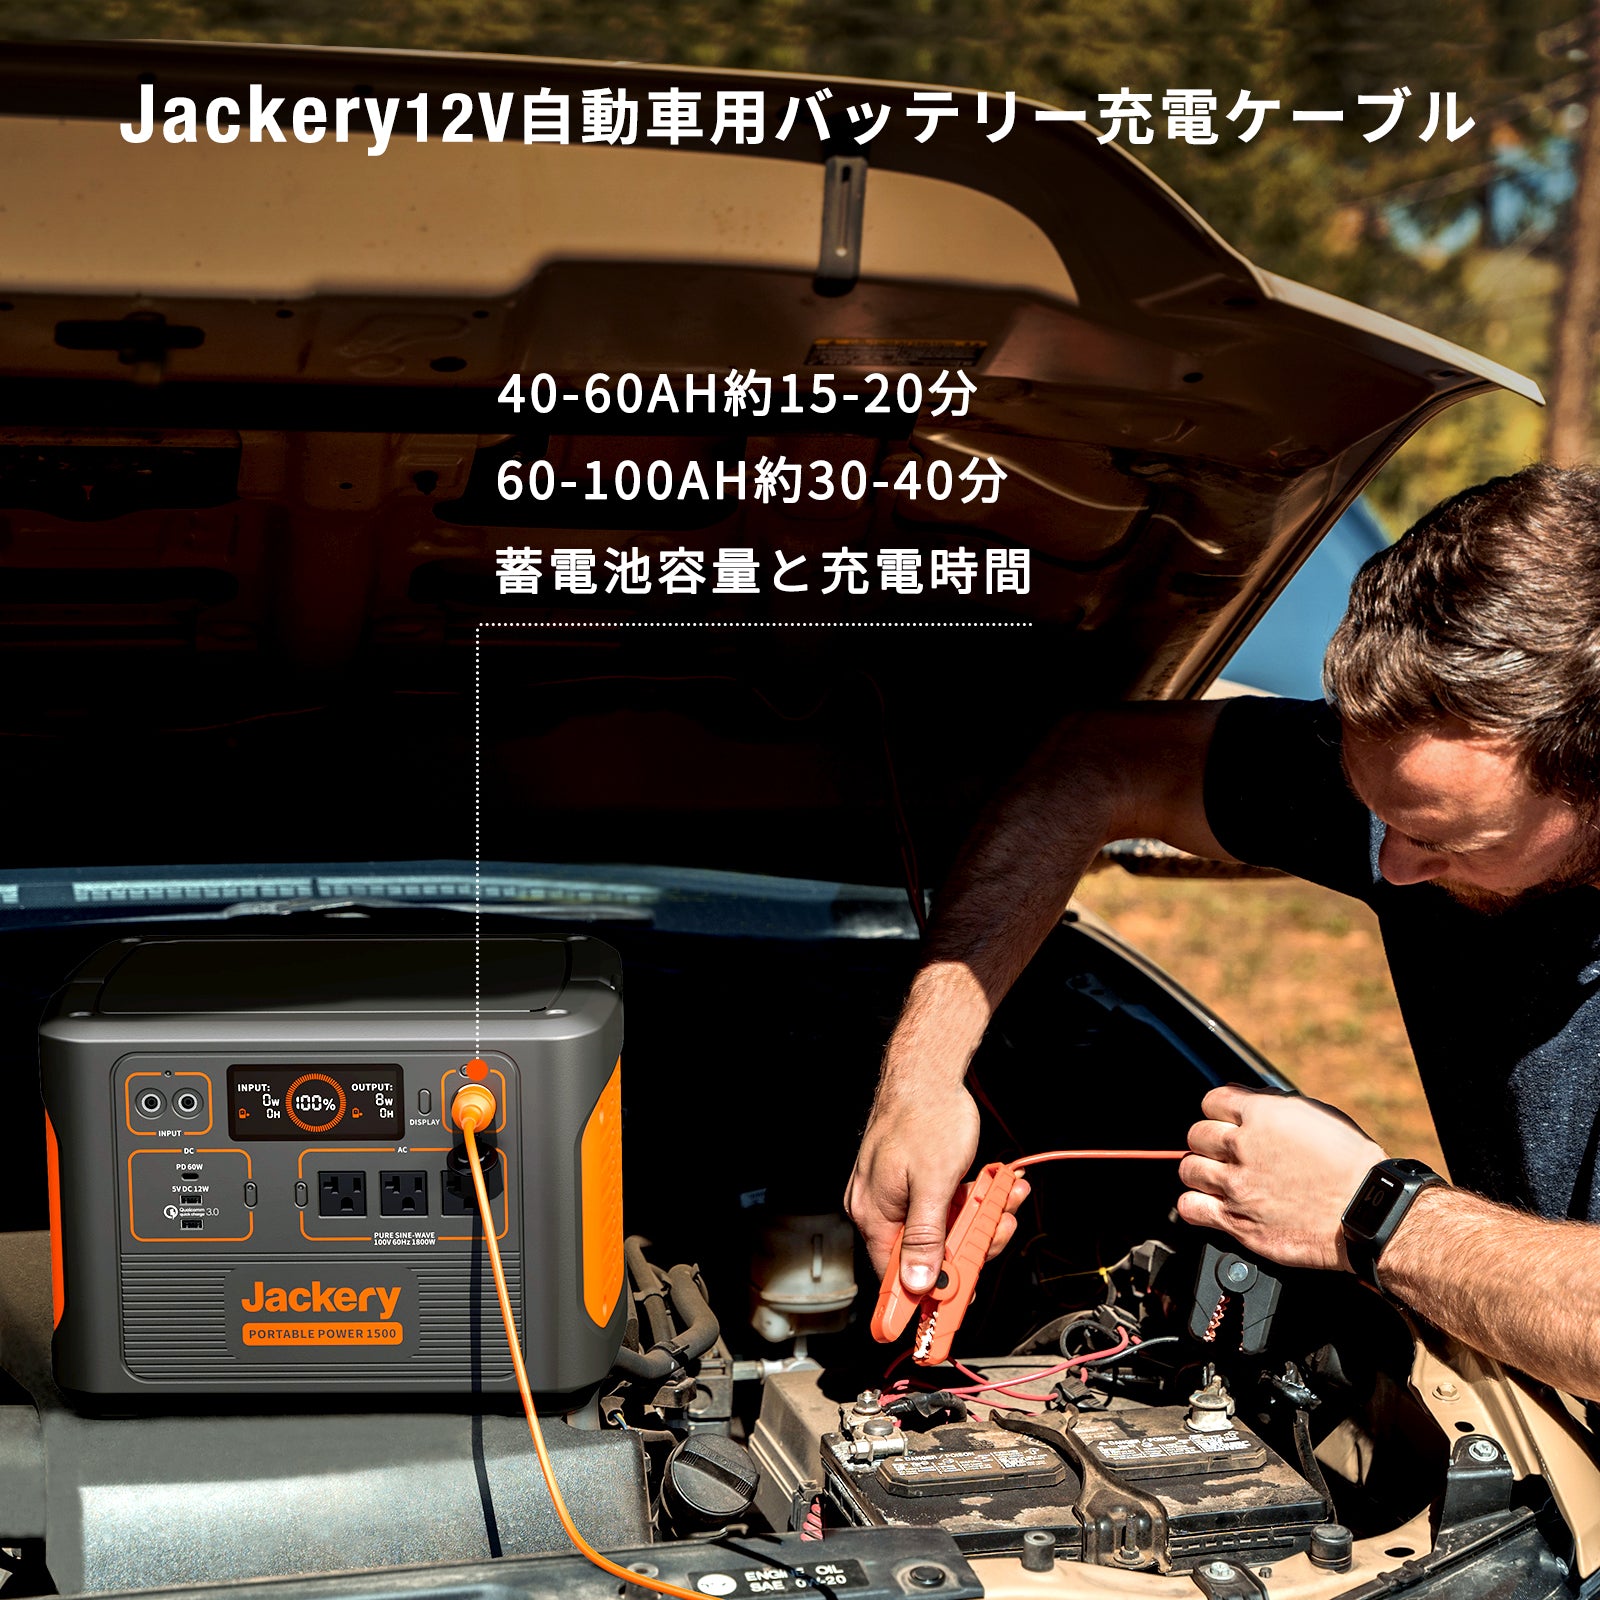 Jackery 12V 自動車用バッテリー充電ケーブル